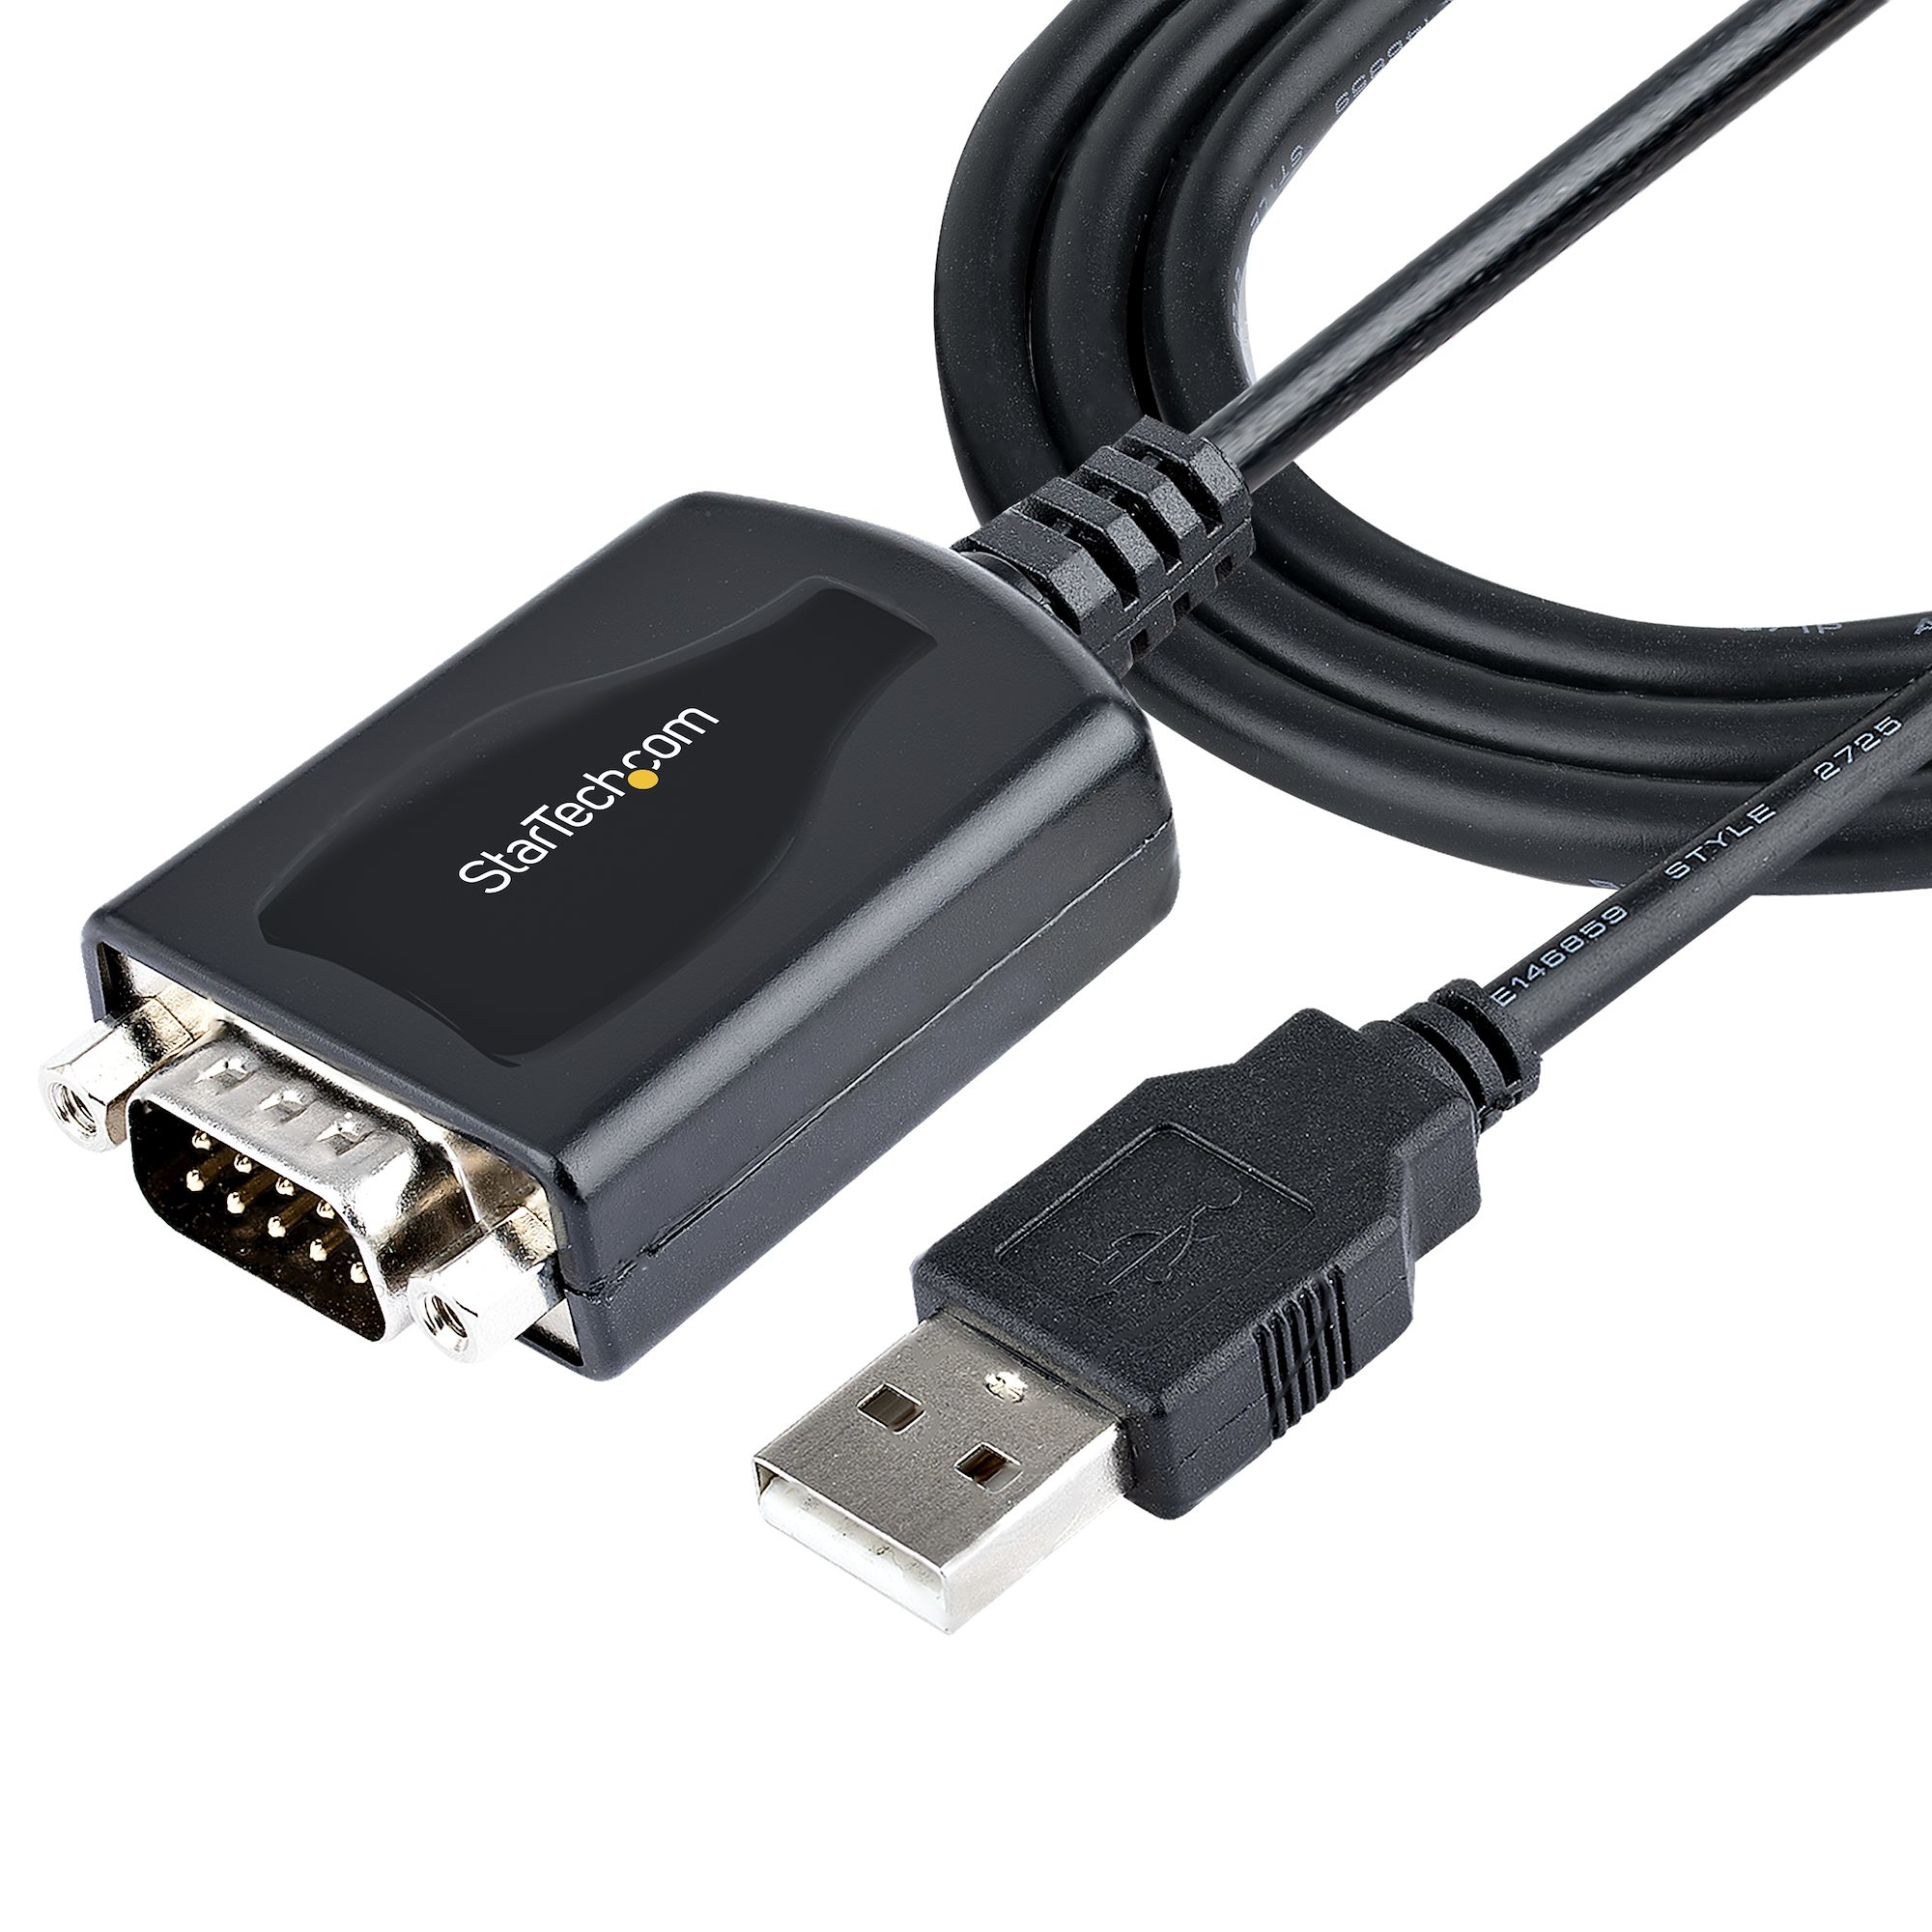 Photos - Cable (video, audio, USB) Startech.com 3ft (1m) USB to Serial Cable with COM Port Retention, DB9 1P3 